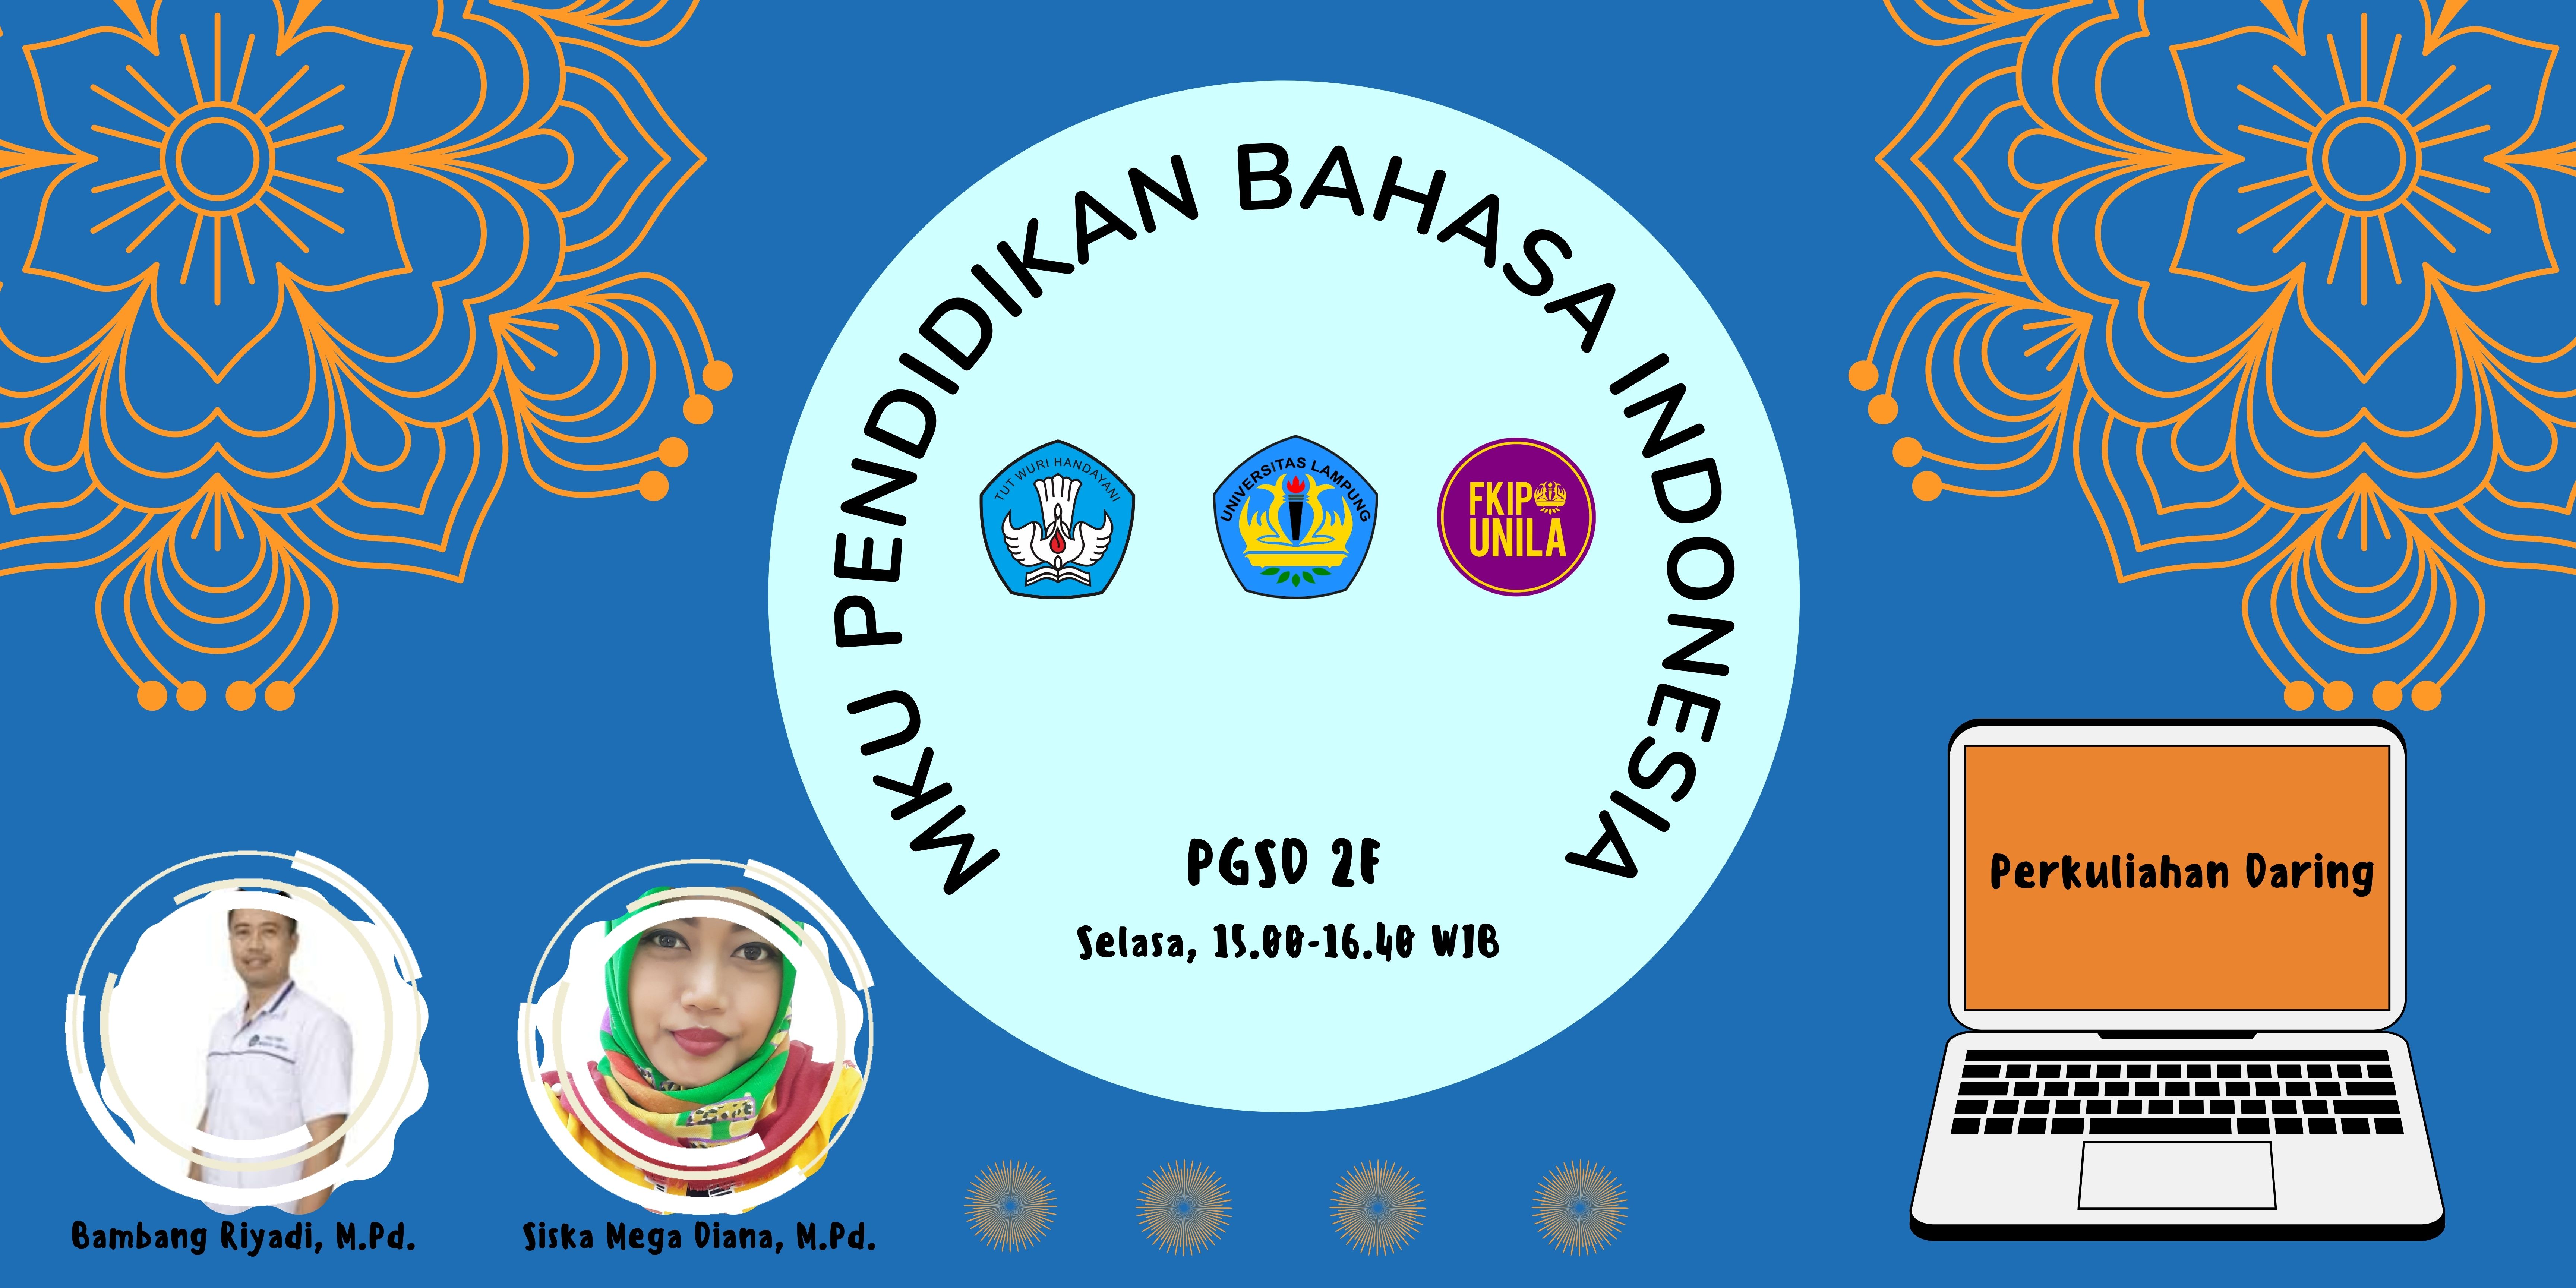 PGSD_MKU PENDIDIKAN BAHASA INDONESIA_KELAS 2F_GENAP_2021/2022